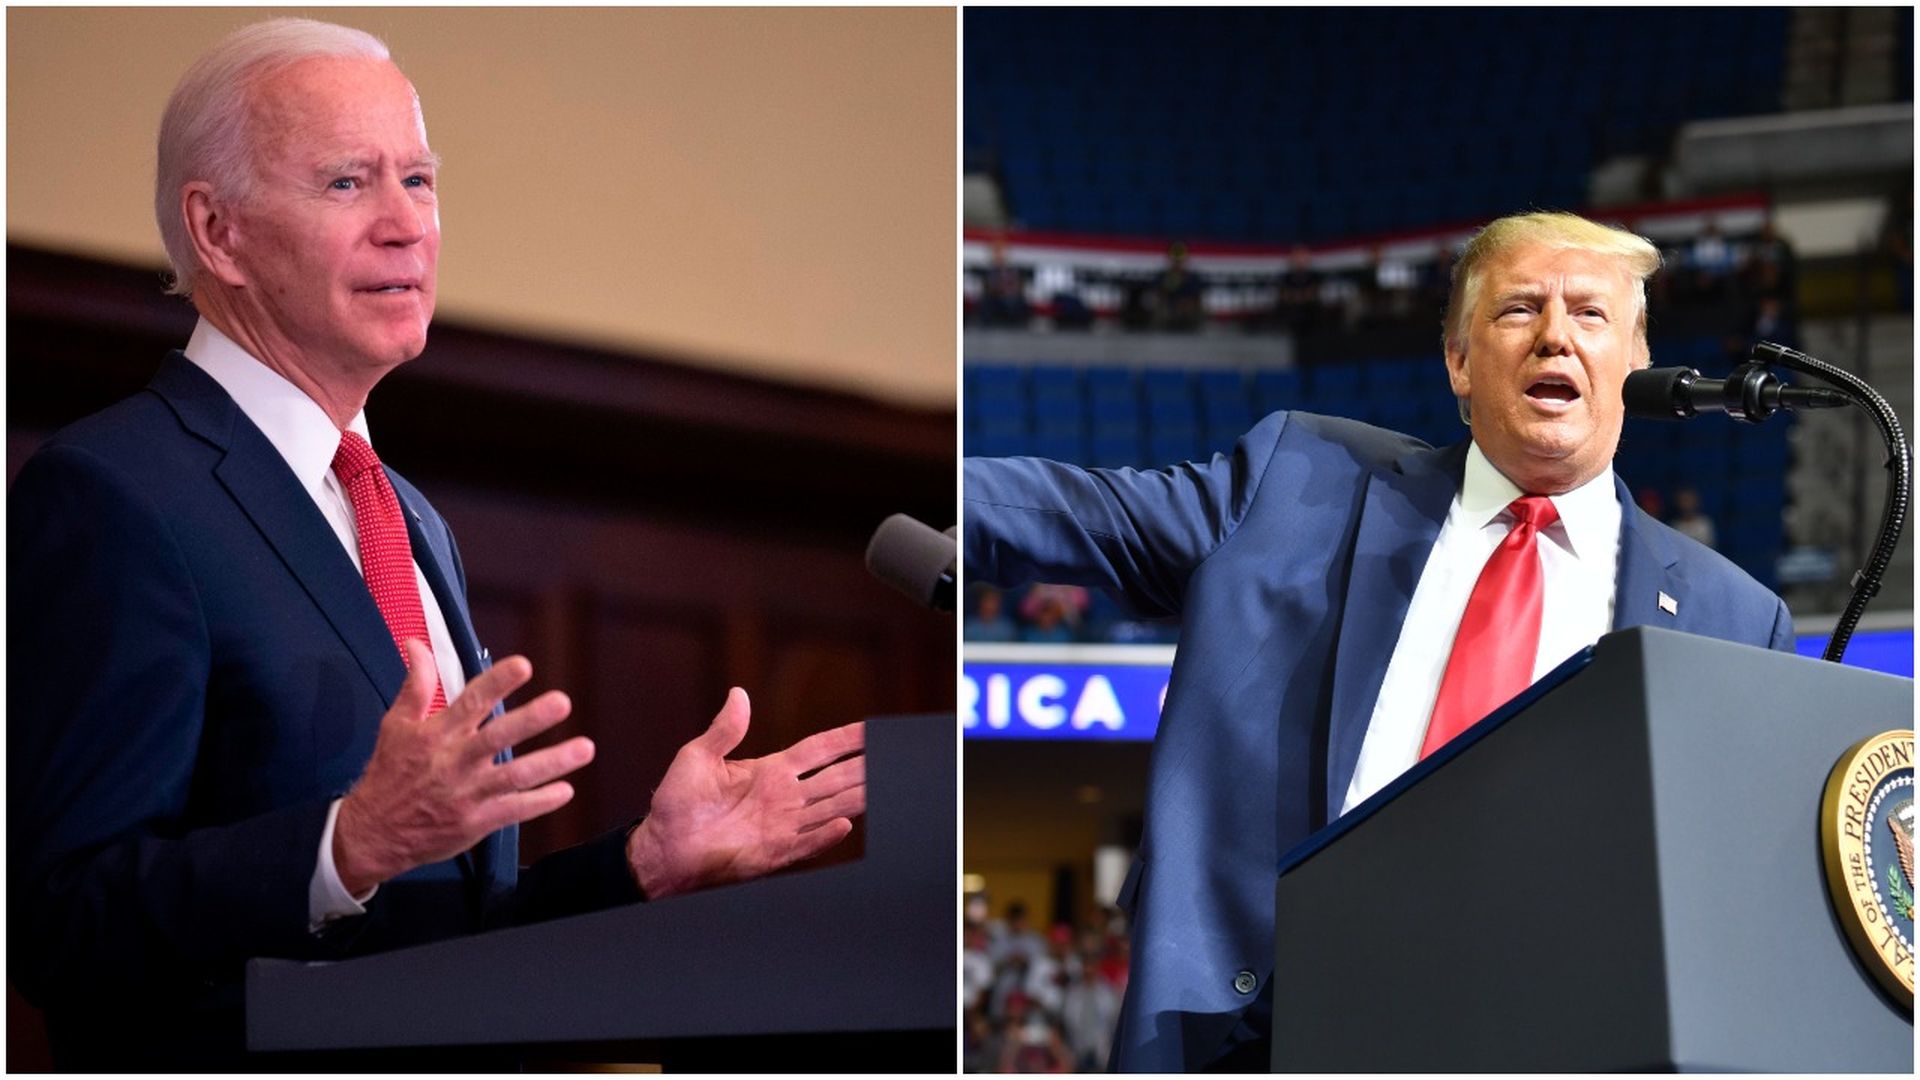 Combination photos of former Vice President Joe Biden and President Trump.